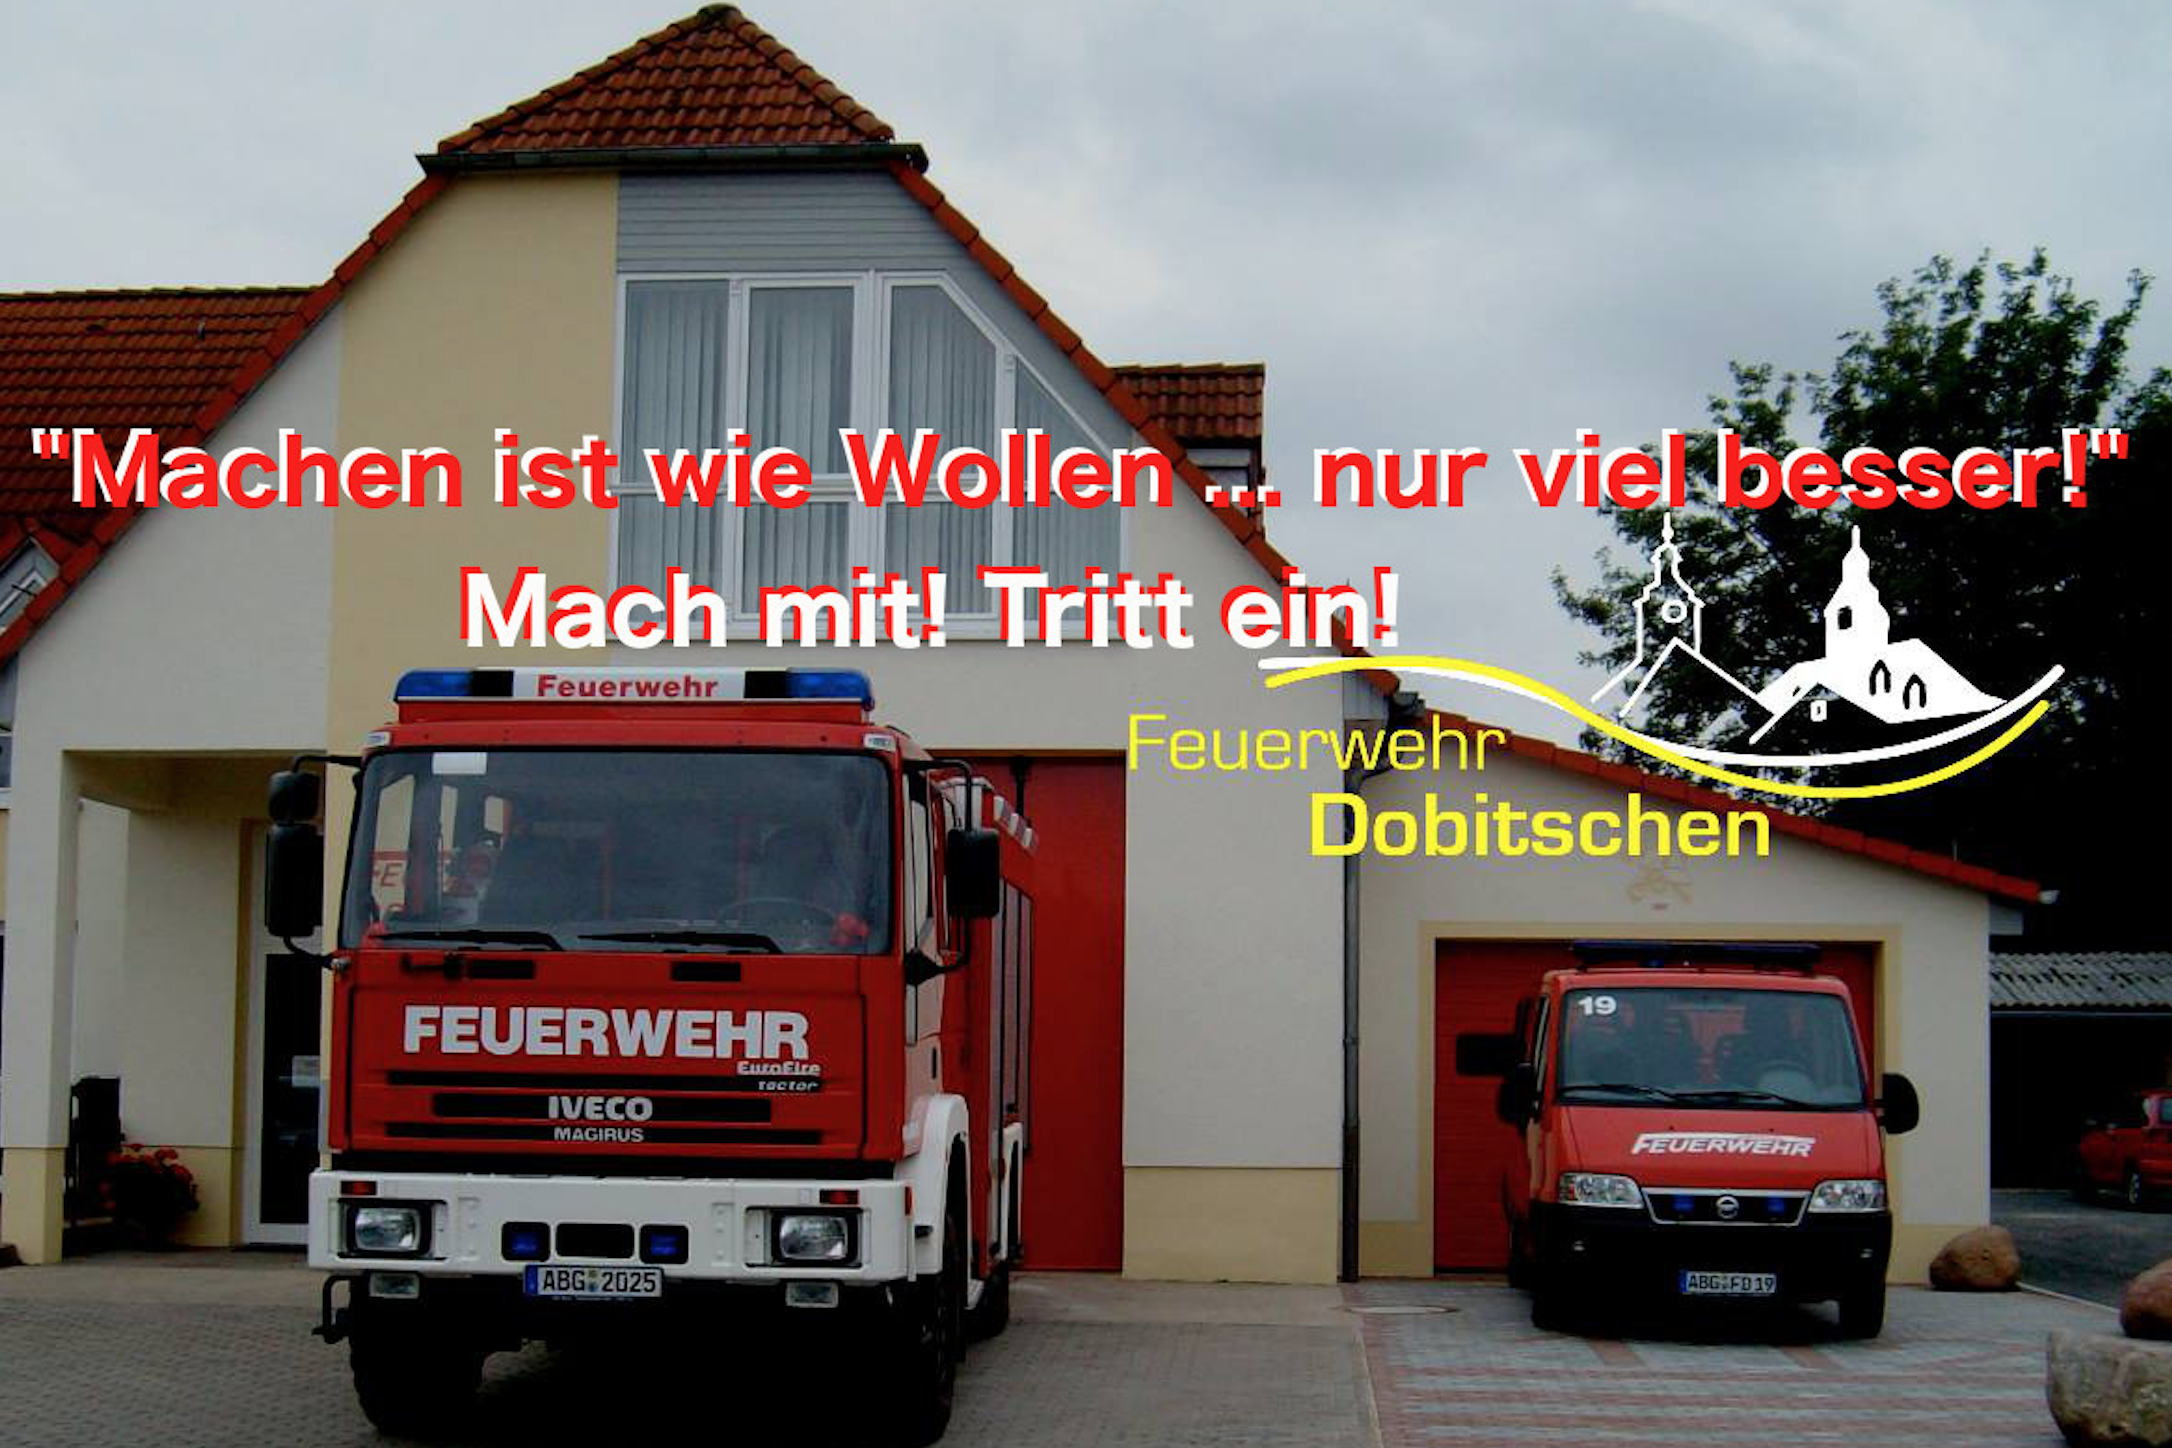 (c) Feuerwehr-dobitschen.de